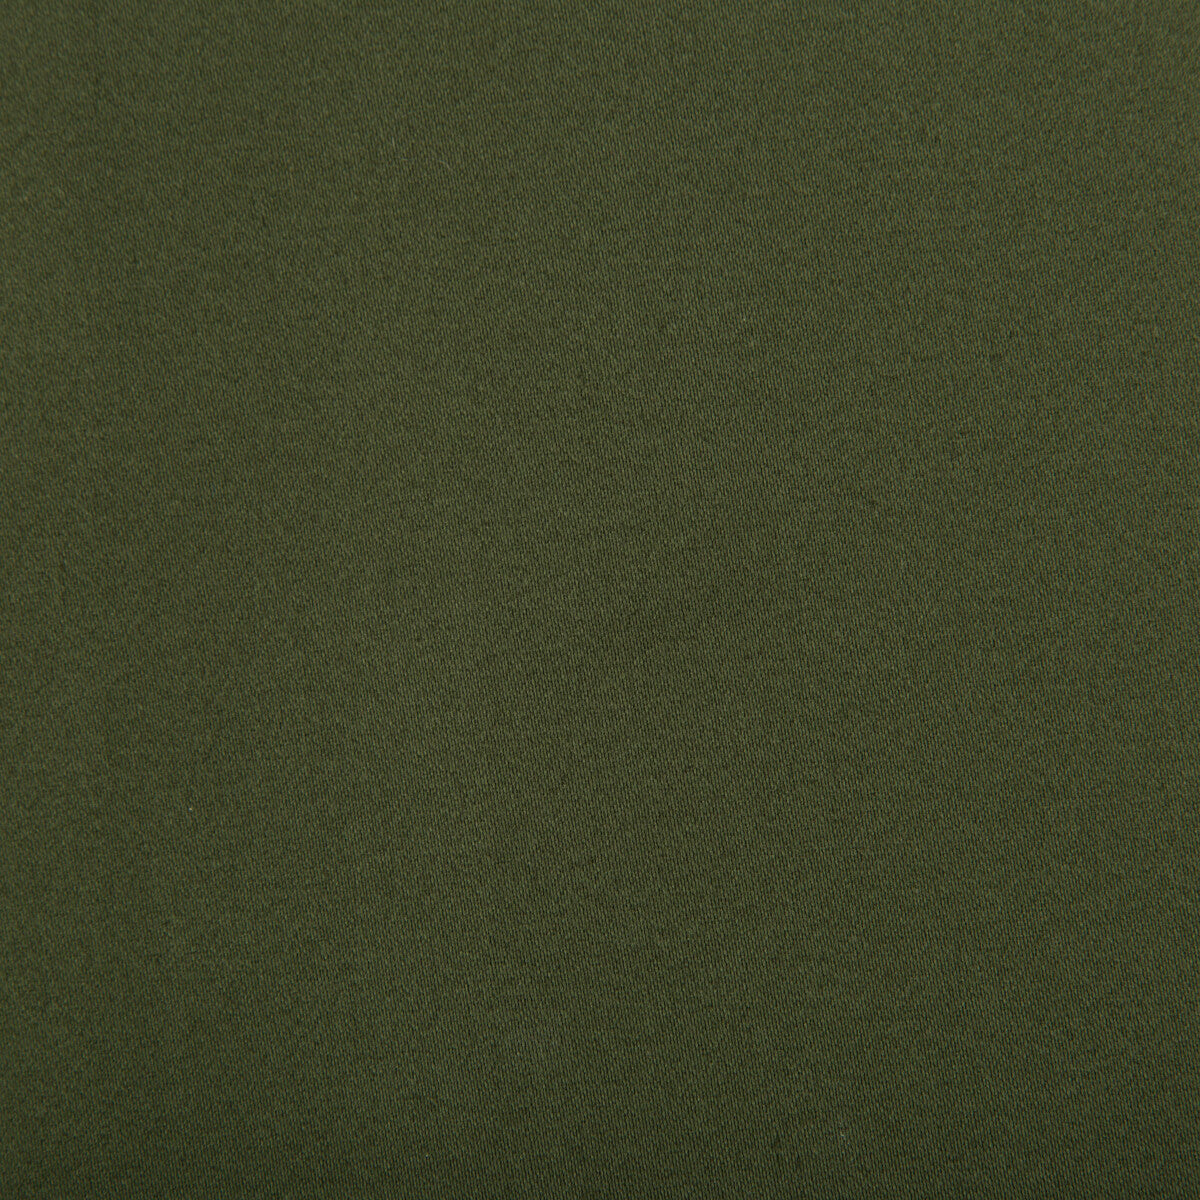 Manzanares fabric in verde botella color - pattern LCT5480.009.0 - by Gaston y Daniela in the Lorenzo Castillo IV collection